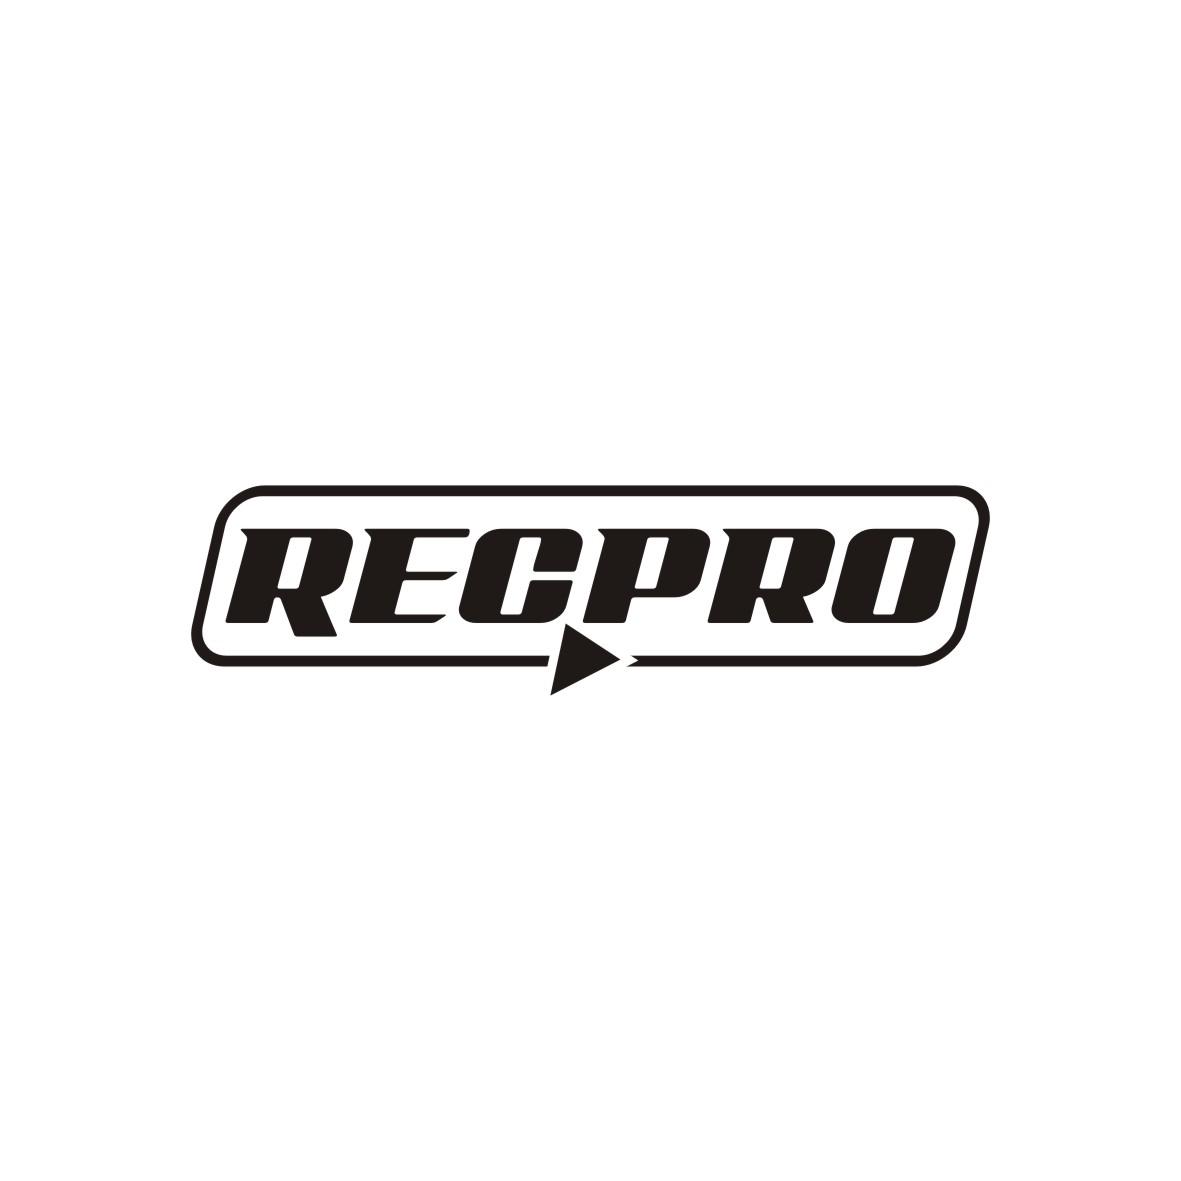 RECPRO09类-科学仪器商标转让